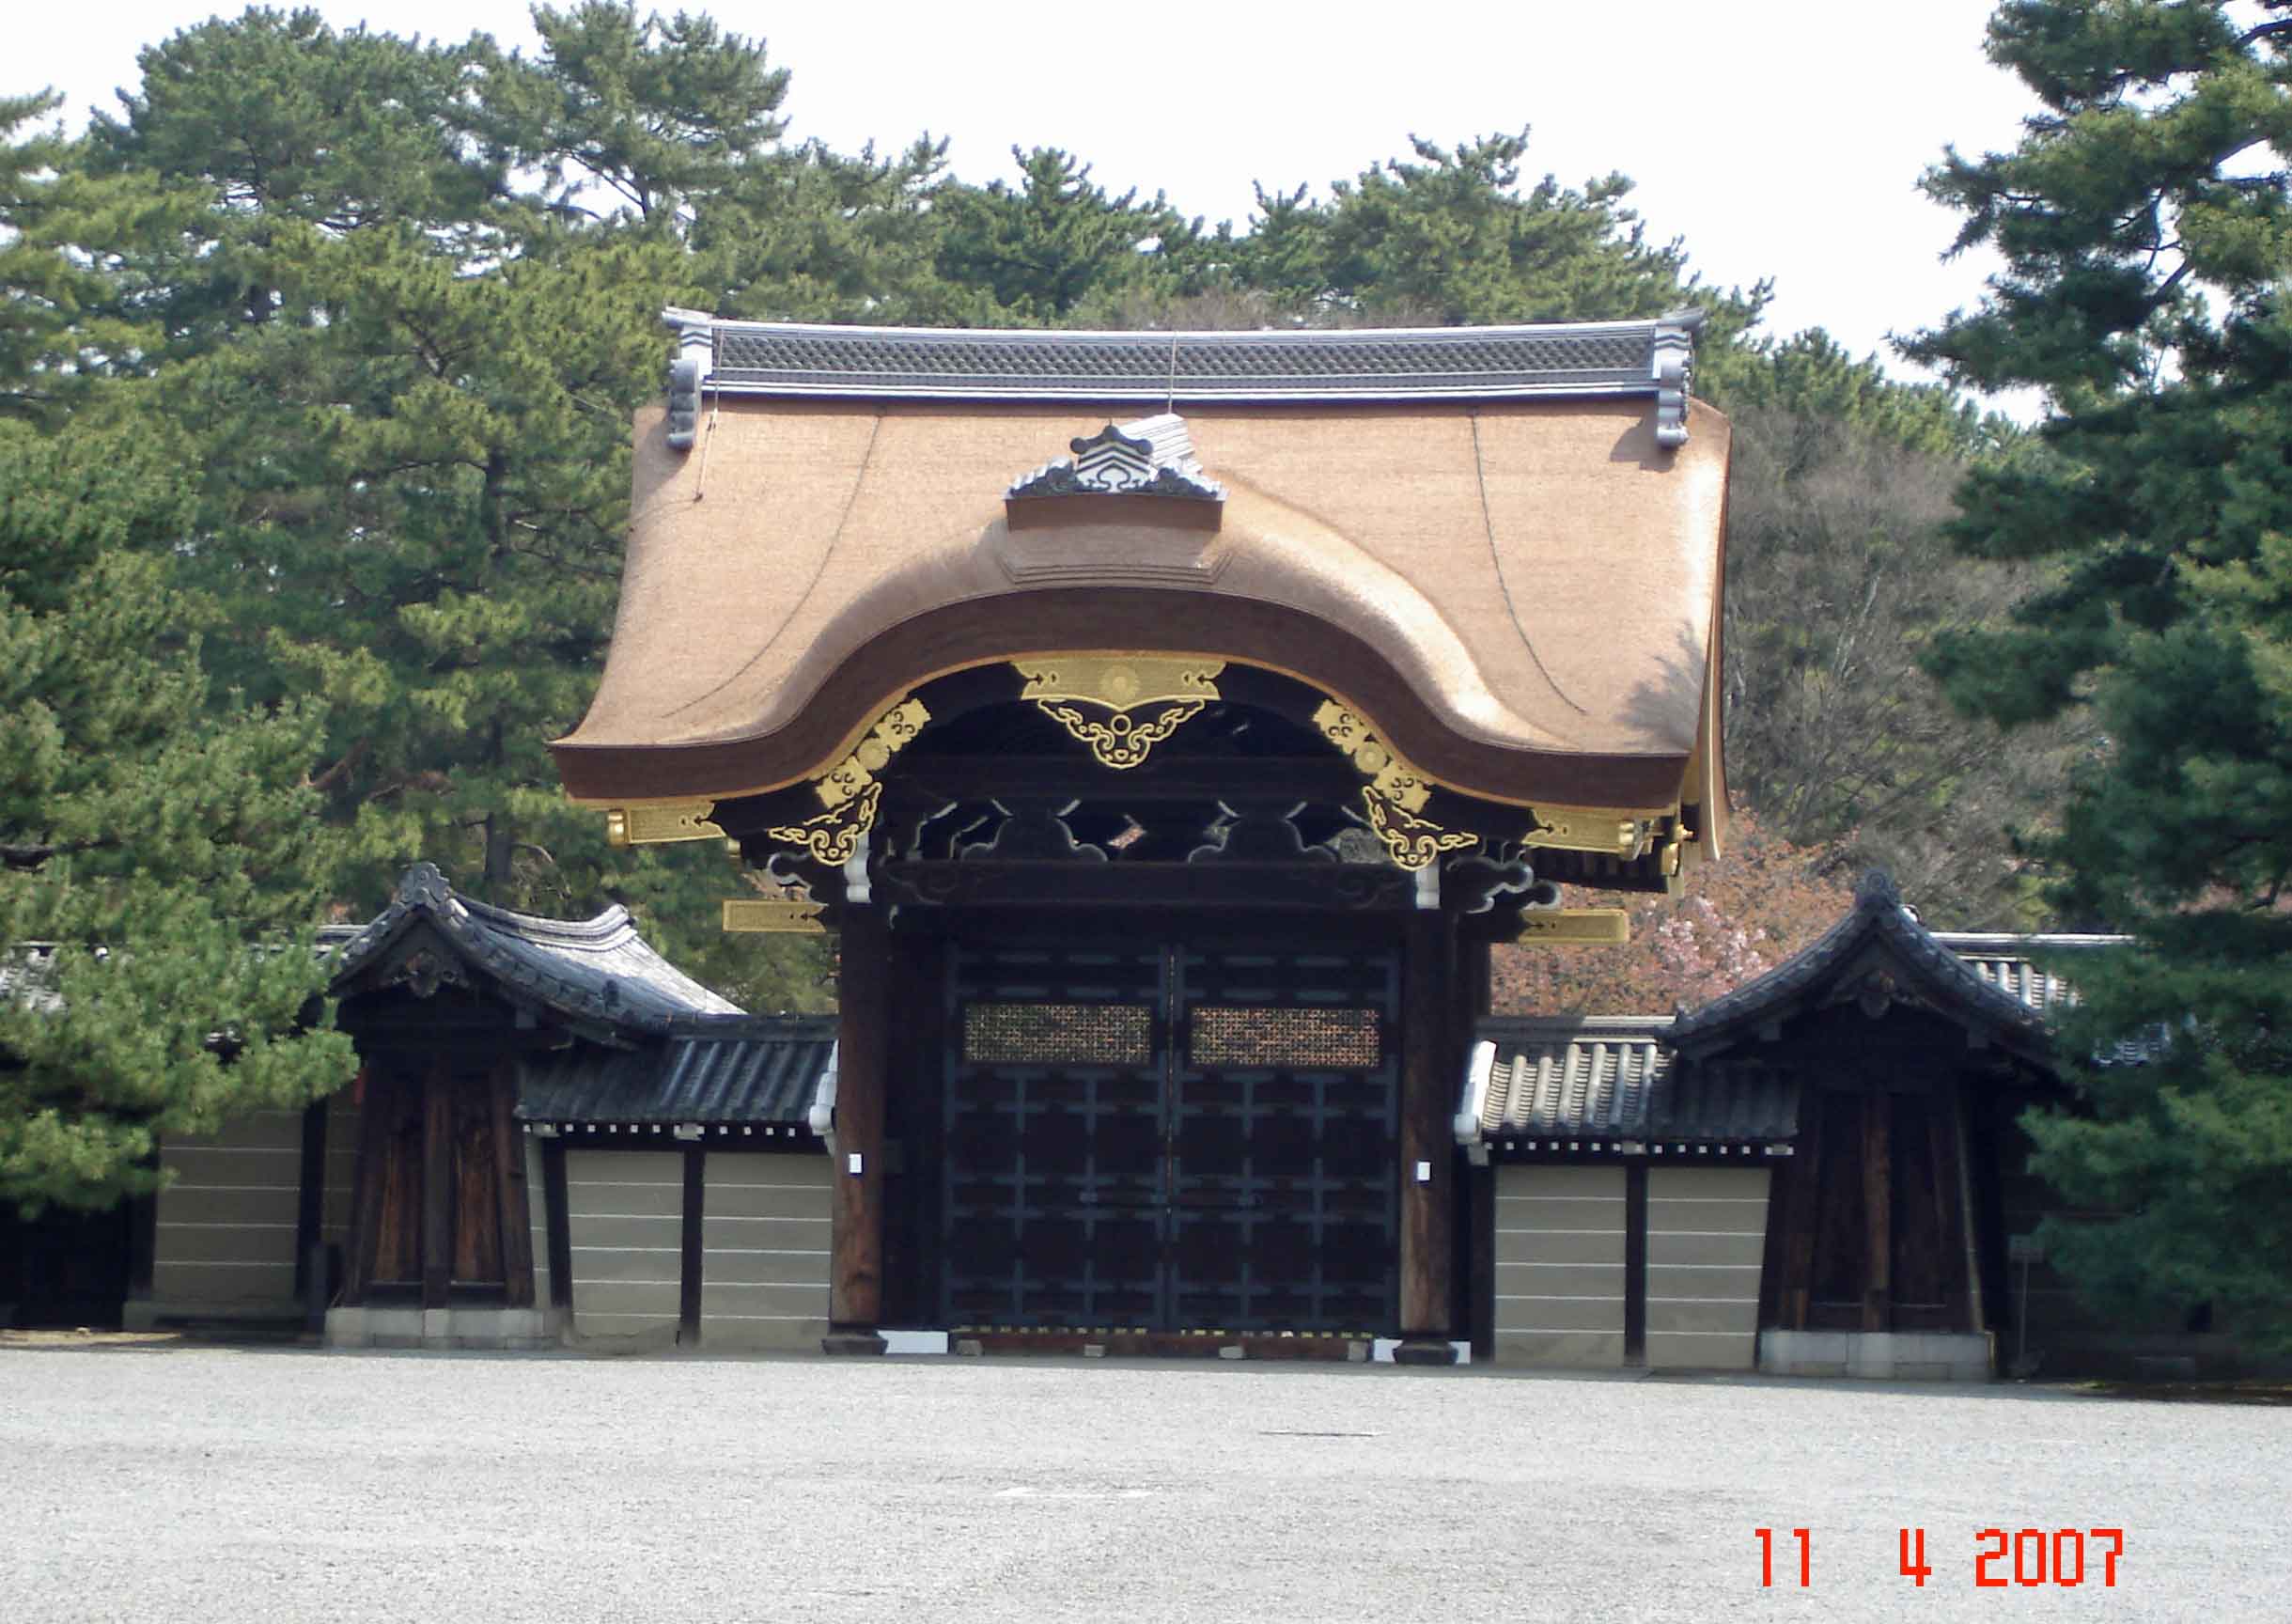 KyotoPalaceEntranceGate gate into Palace precinct